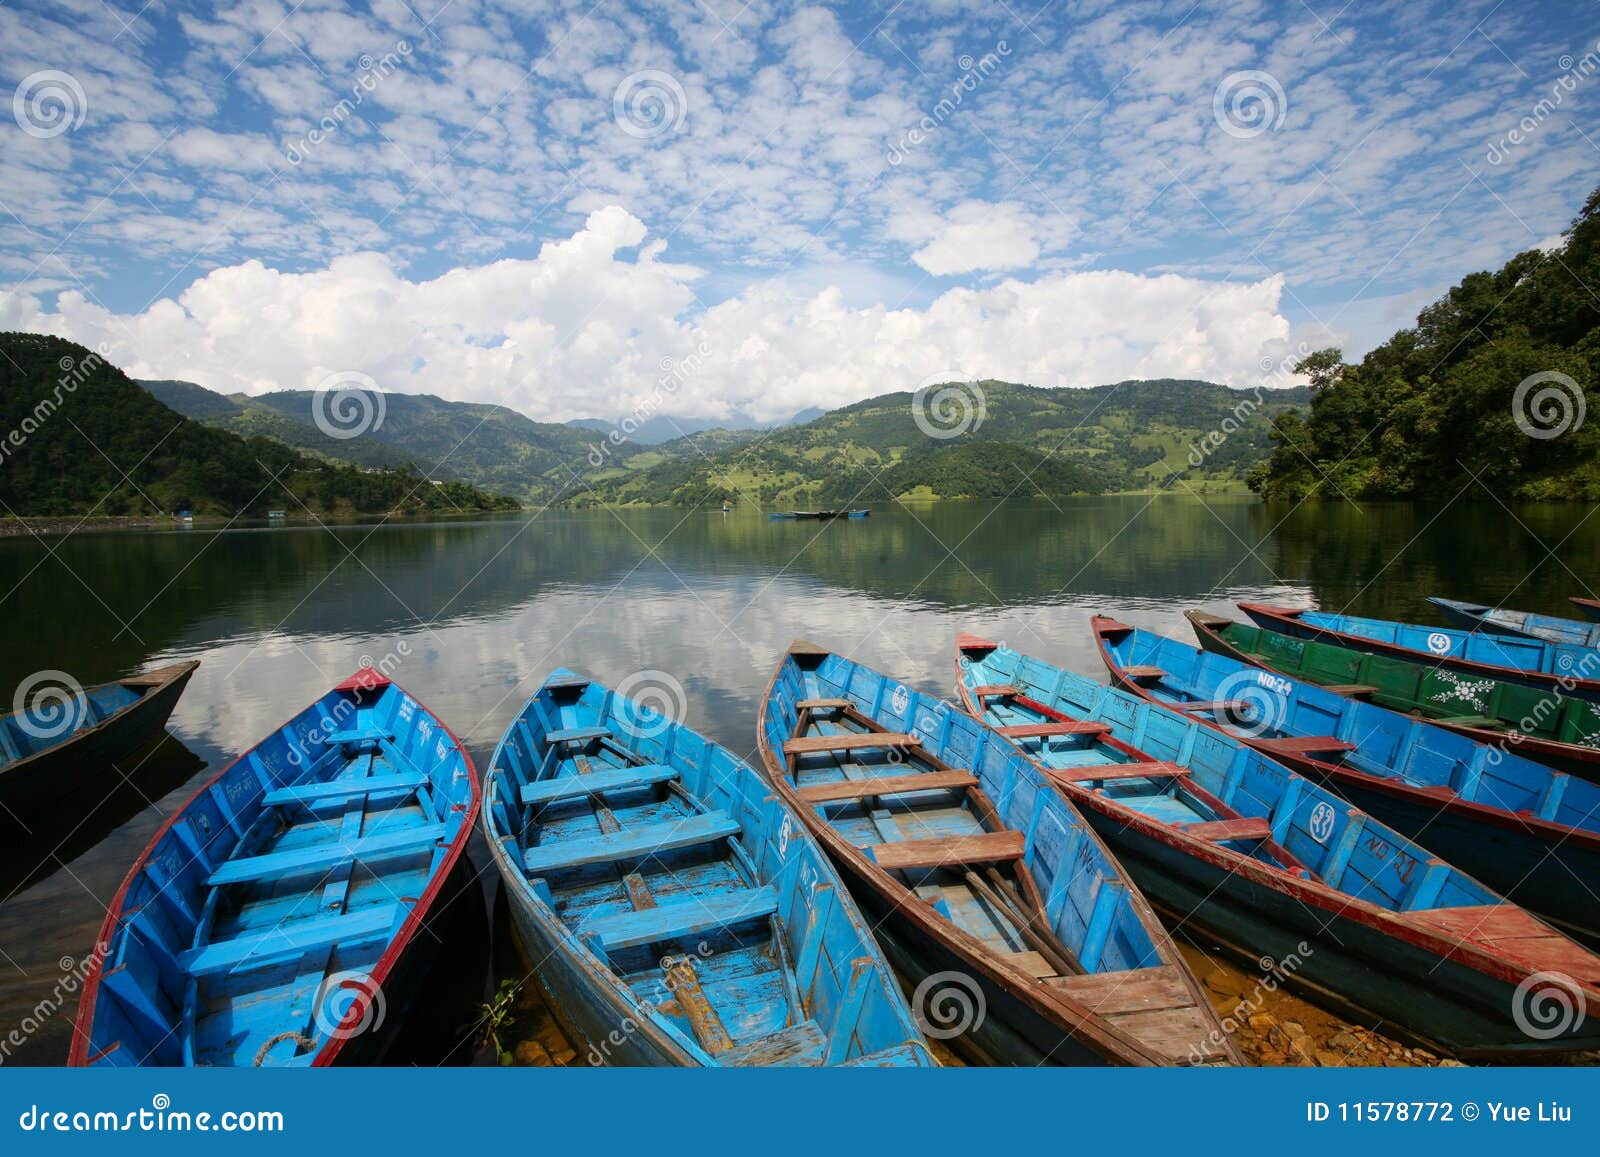 blue boats in lake pokhara nepal